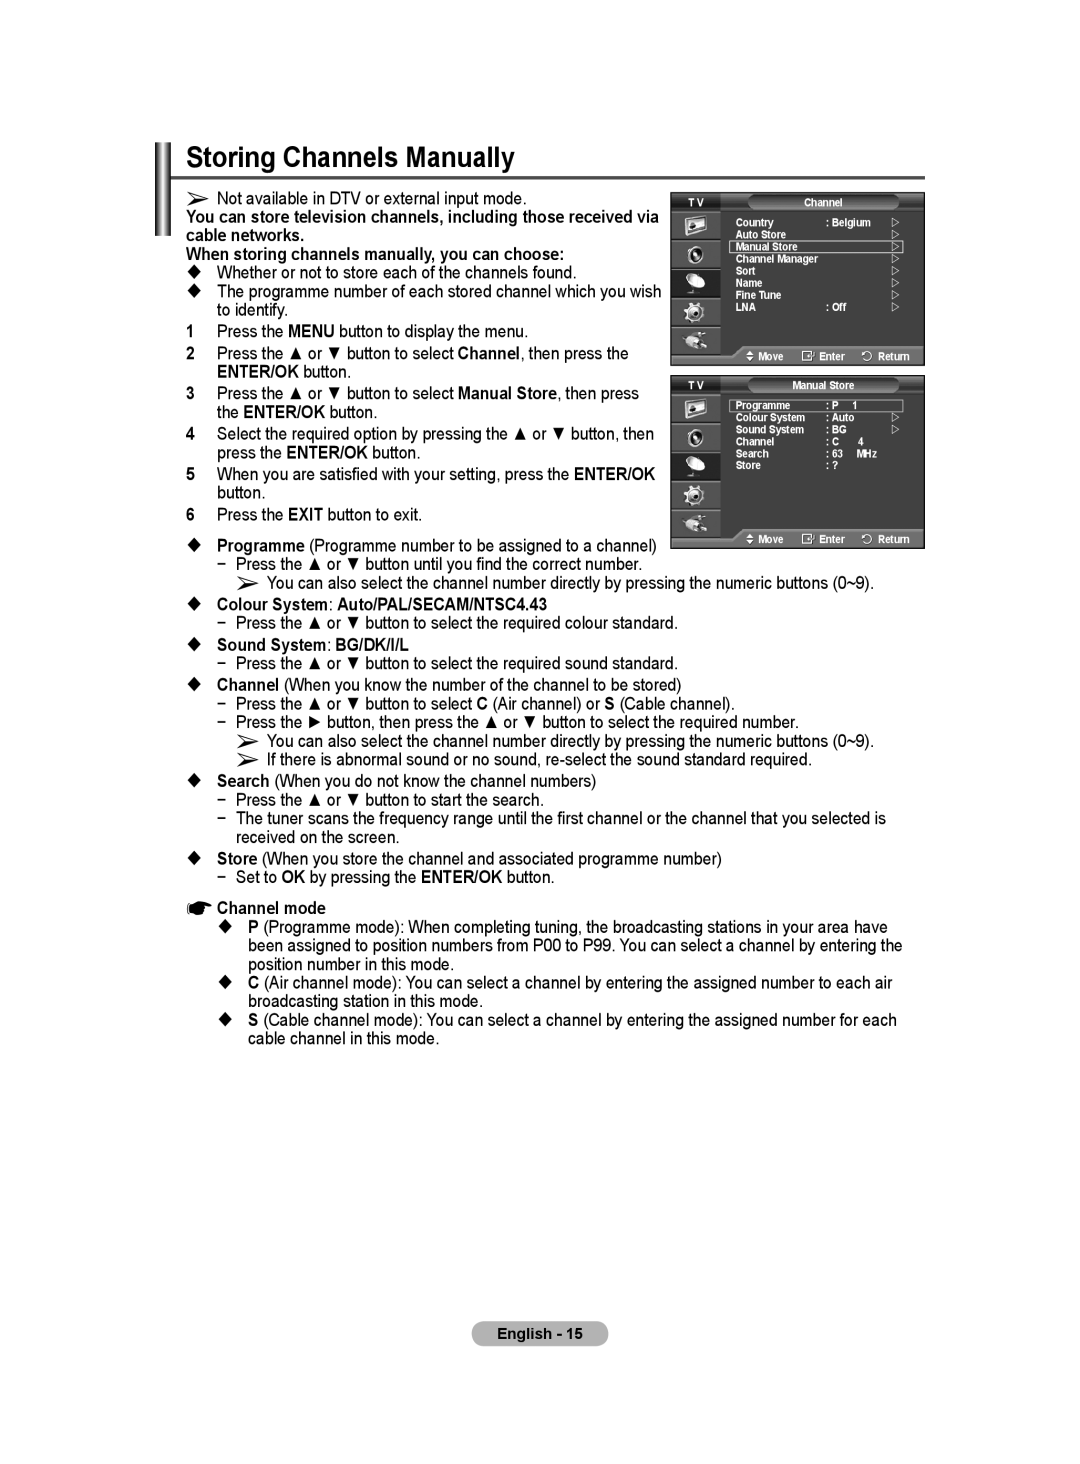 Samsung BN68-01171B-03 manual Storing Channels Manually, Colour System Auto/PAL/SECAM/NTSC4.43, Sound System: BG/DK/I/L 